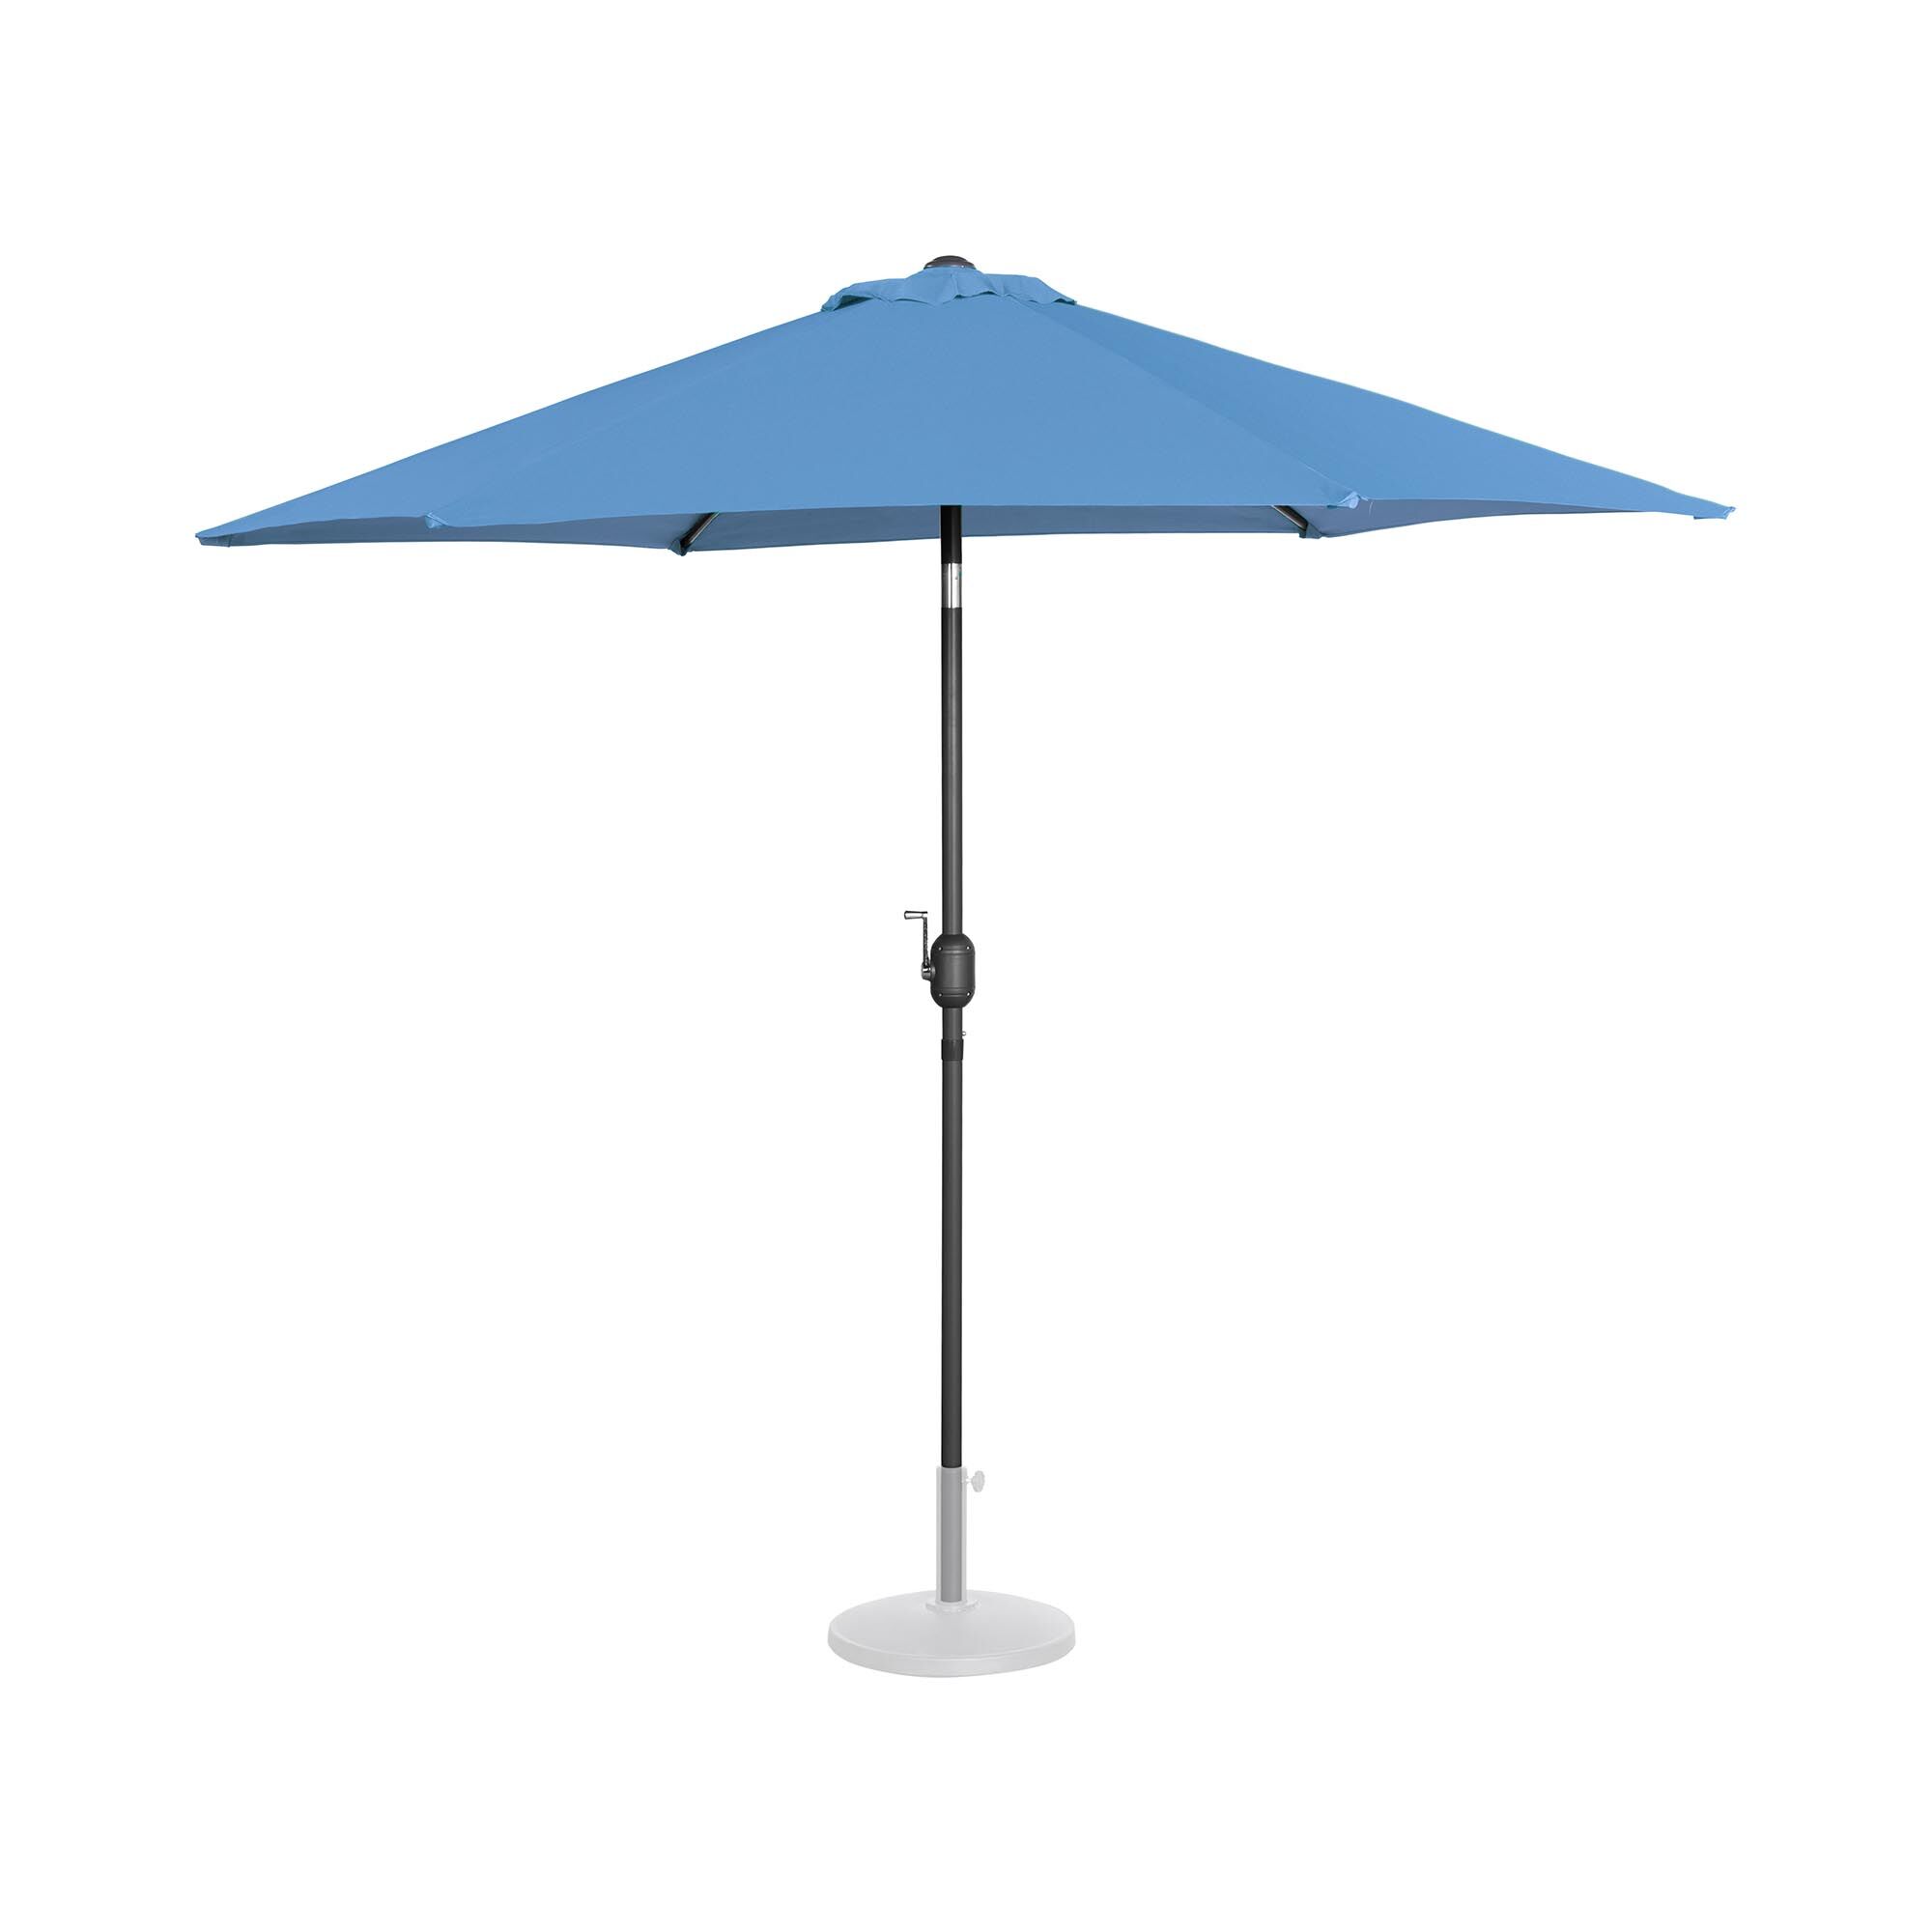 Uniprodo Large Outdoor Umbrella - blue - hexagonal - Ø 270 cm - tiltable UNI_UMBRELLA_R270BL